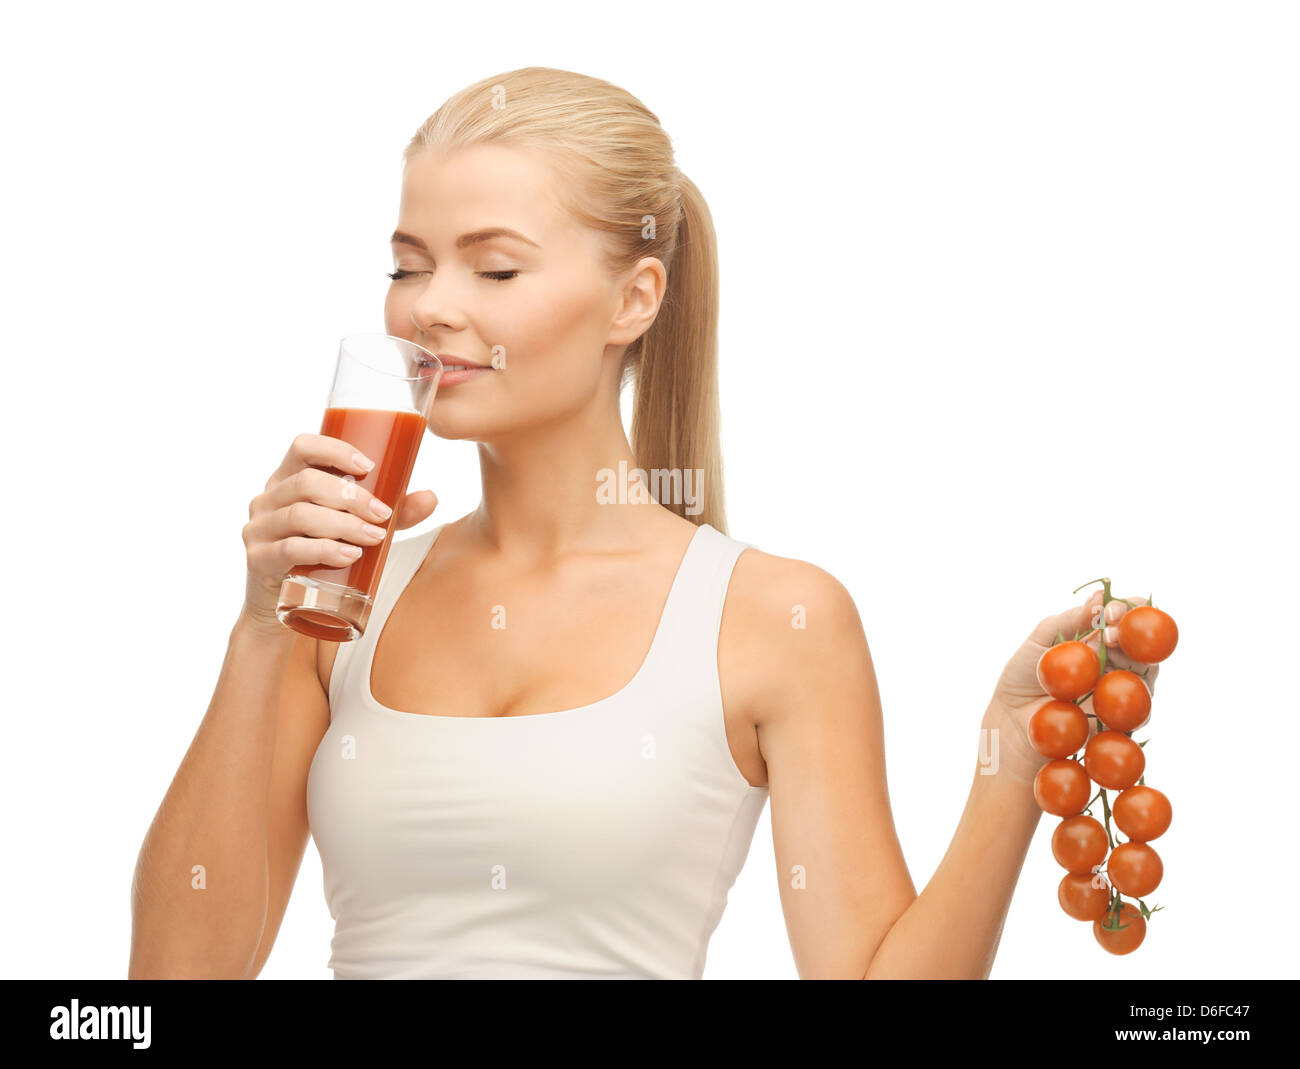 woman drinking tomato juice Stock Photo